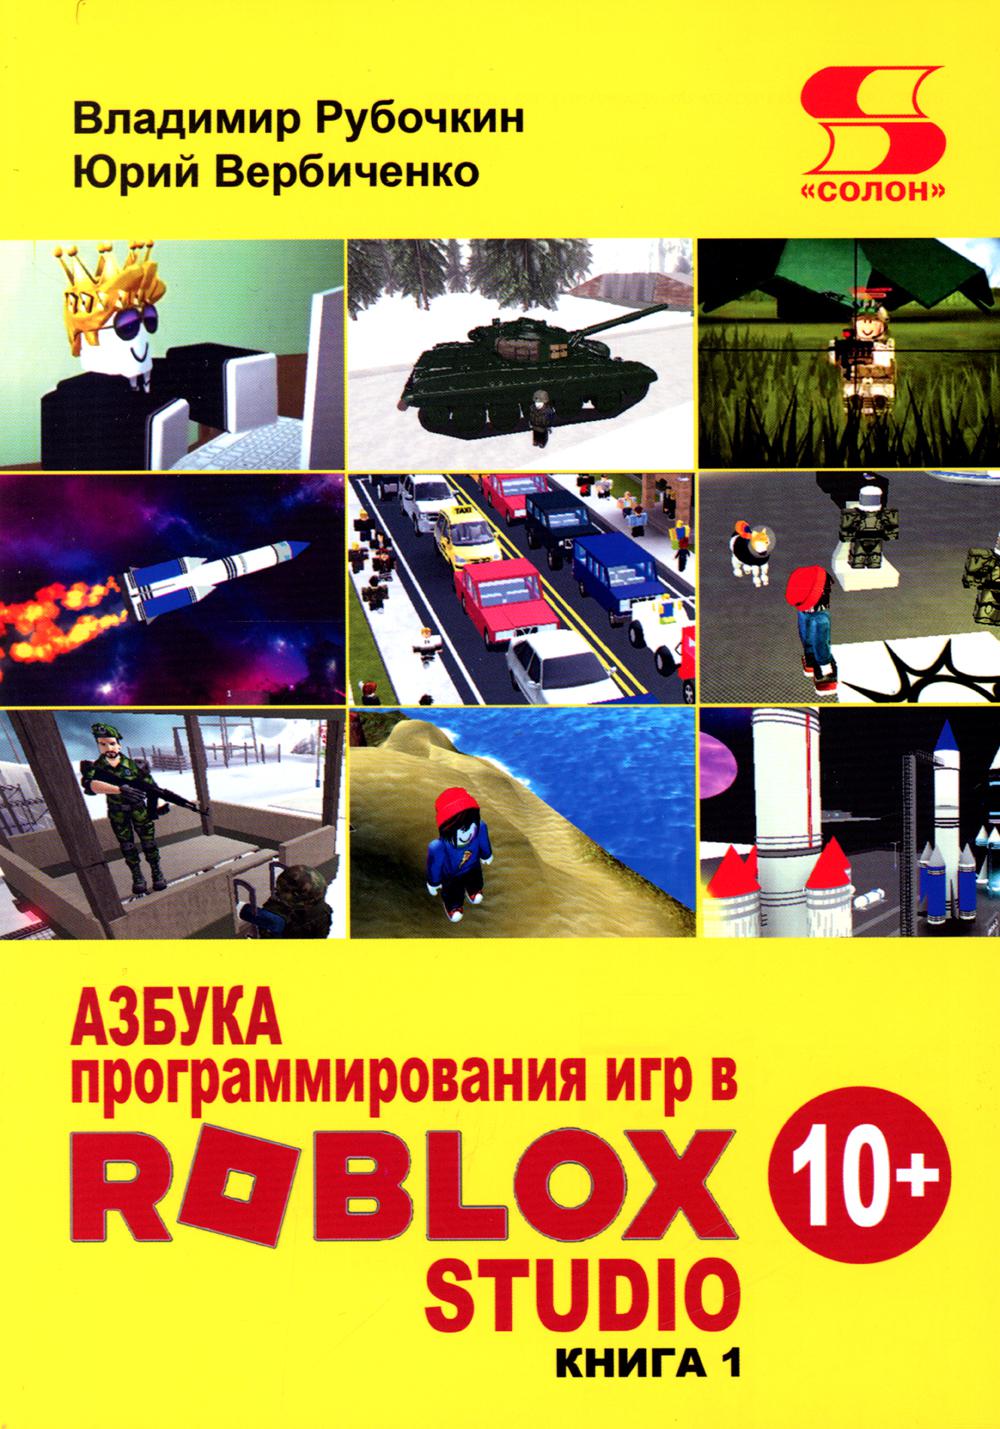     Roblox Studio 10+